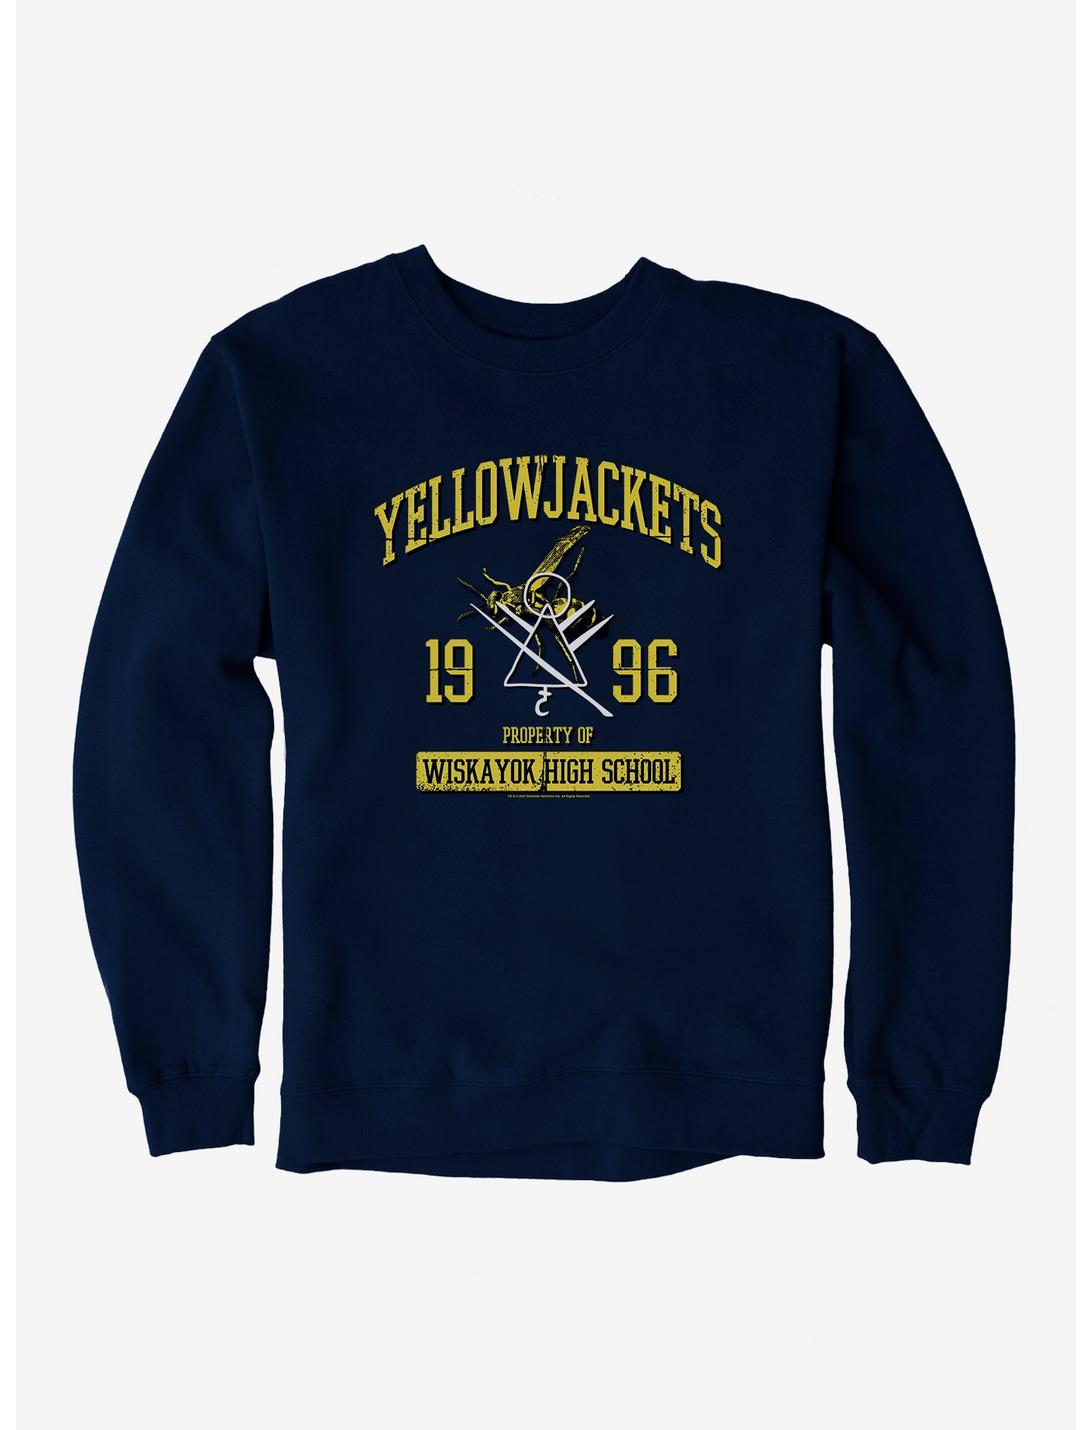 Yellowjackets Property Of Wiskayok High School Sweatshirt, NAVY, hi-res